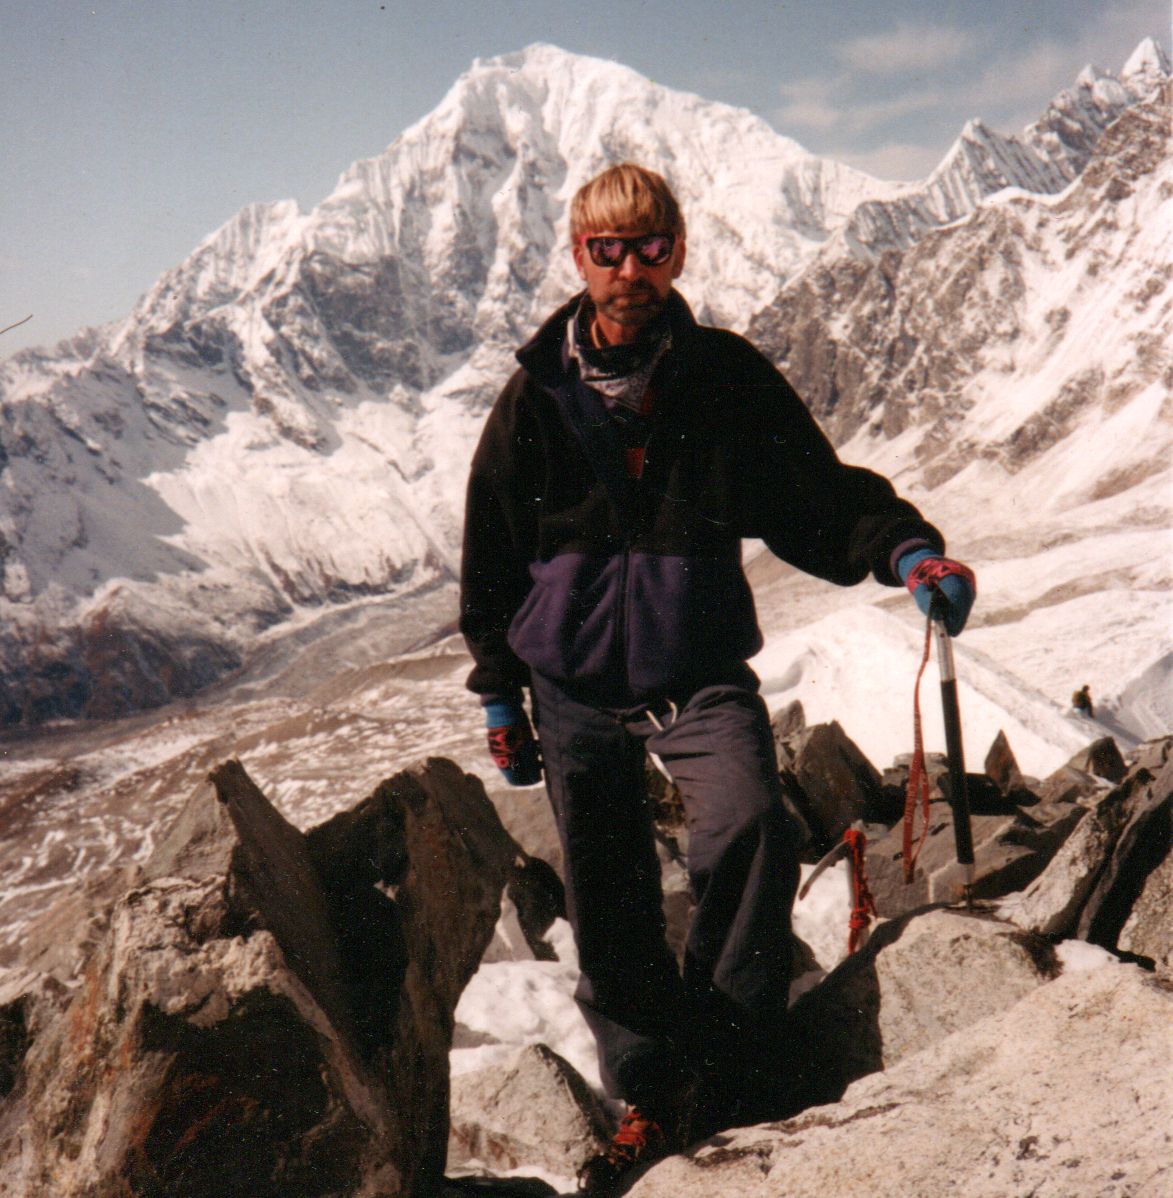 On summit of Yala Peak with Langtang Lirung in background